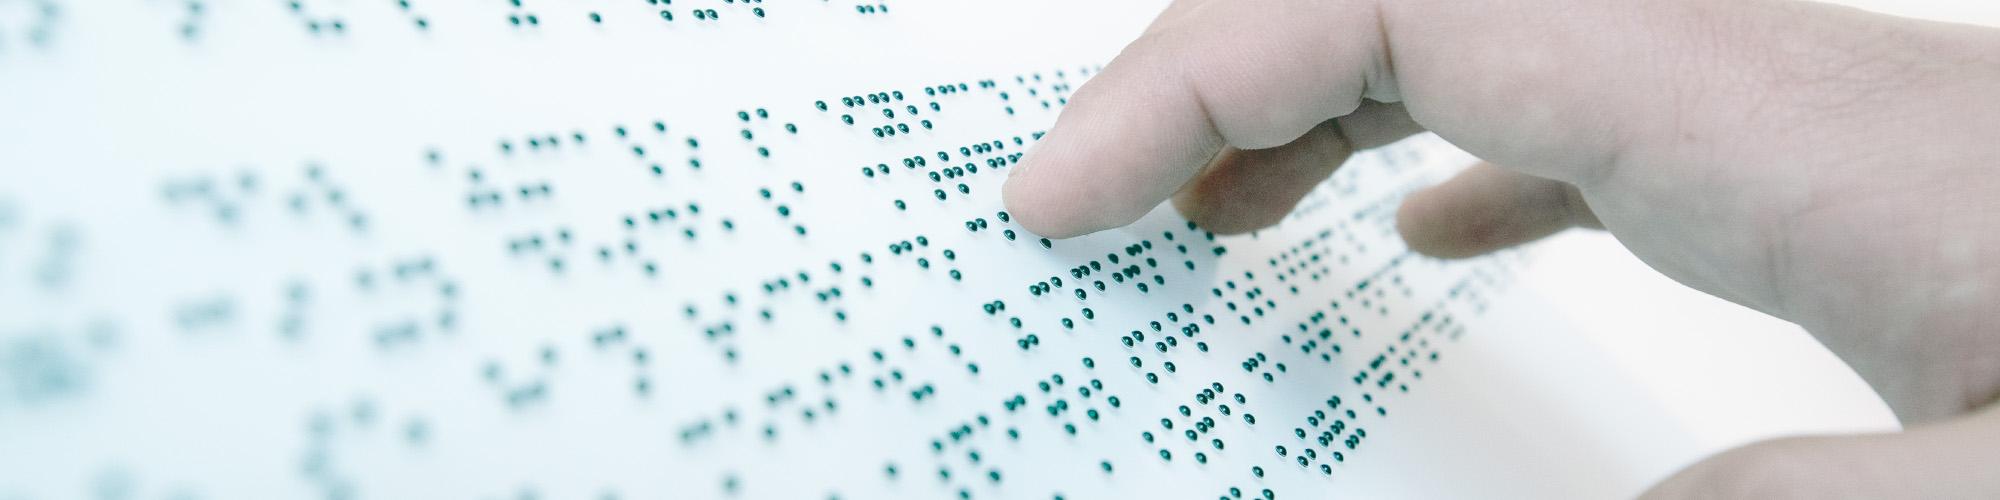 Ã©criture braille